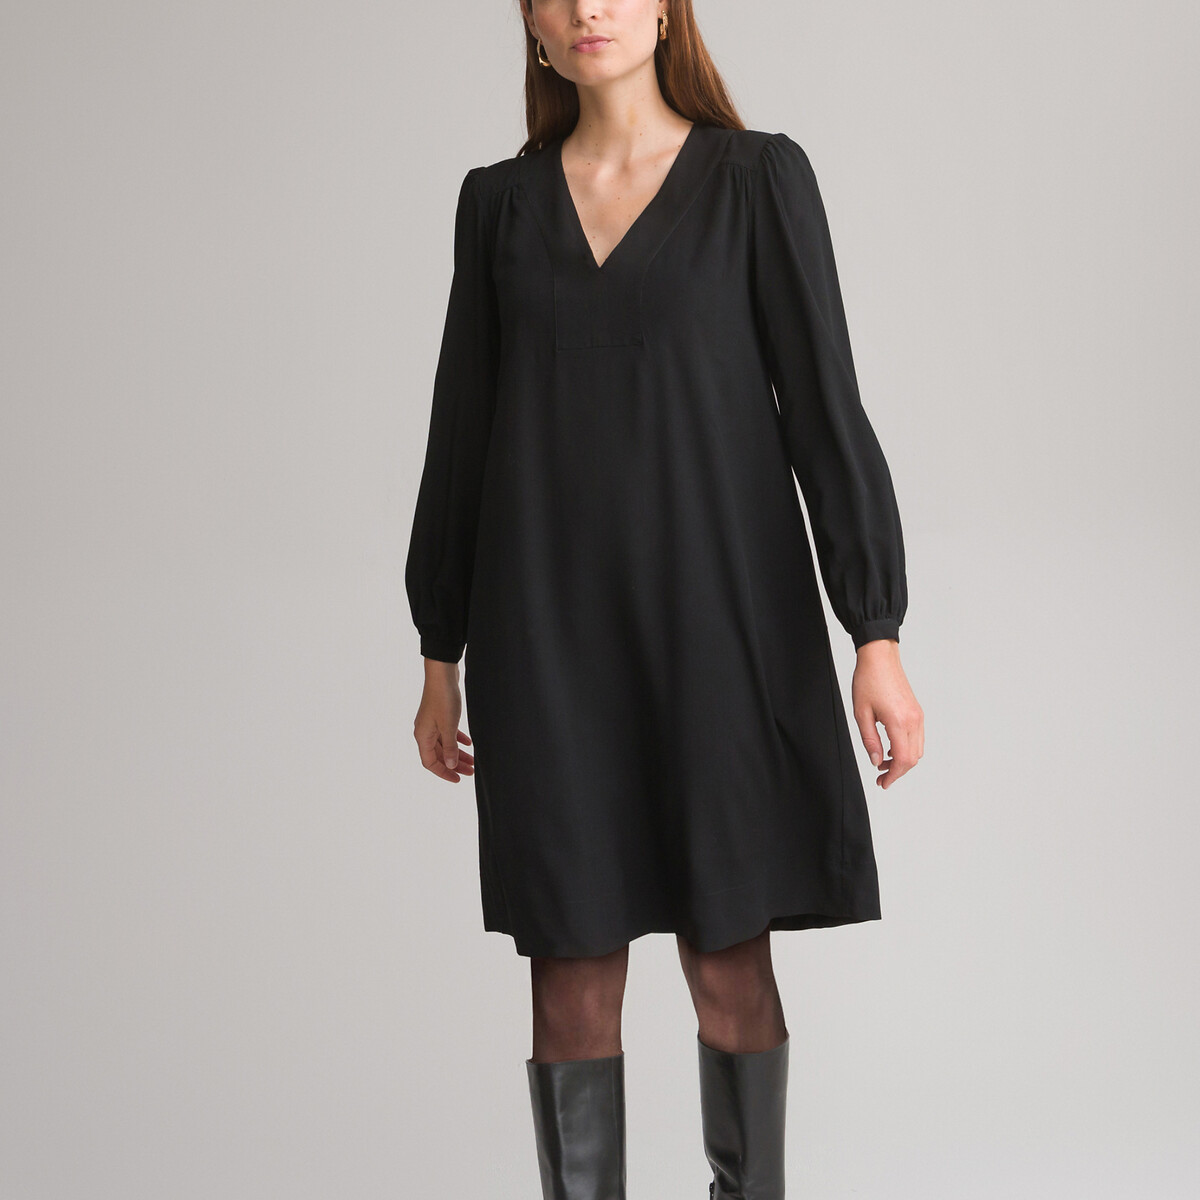 Full mid-length dress, black, Anne Weyburn | La Redoute